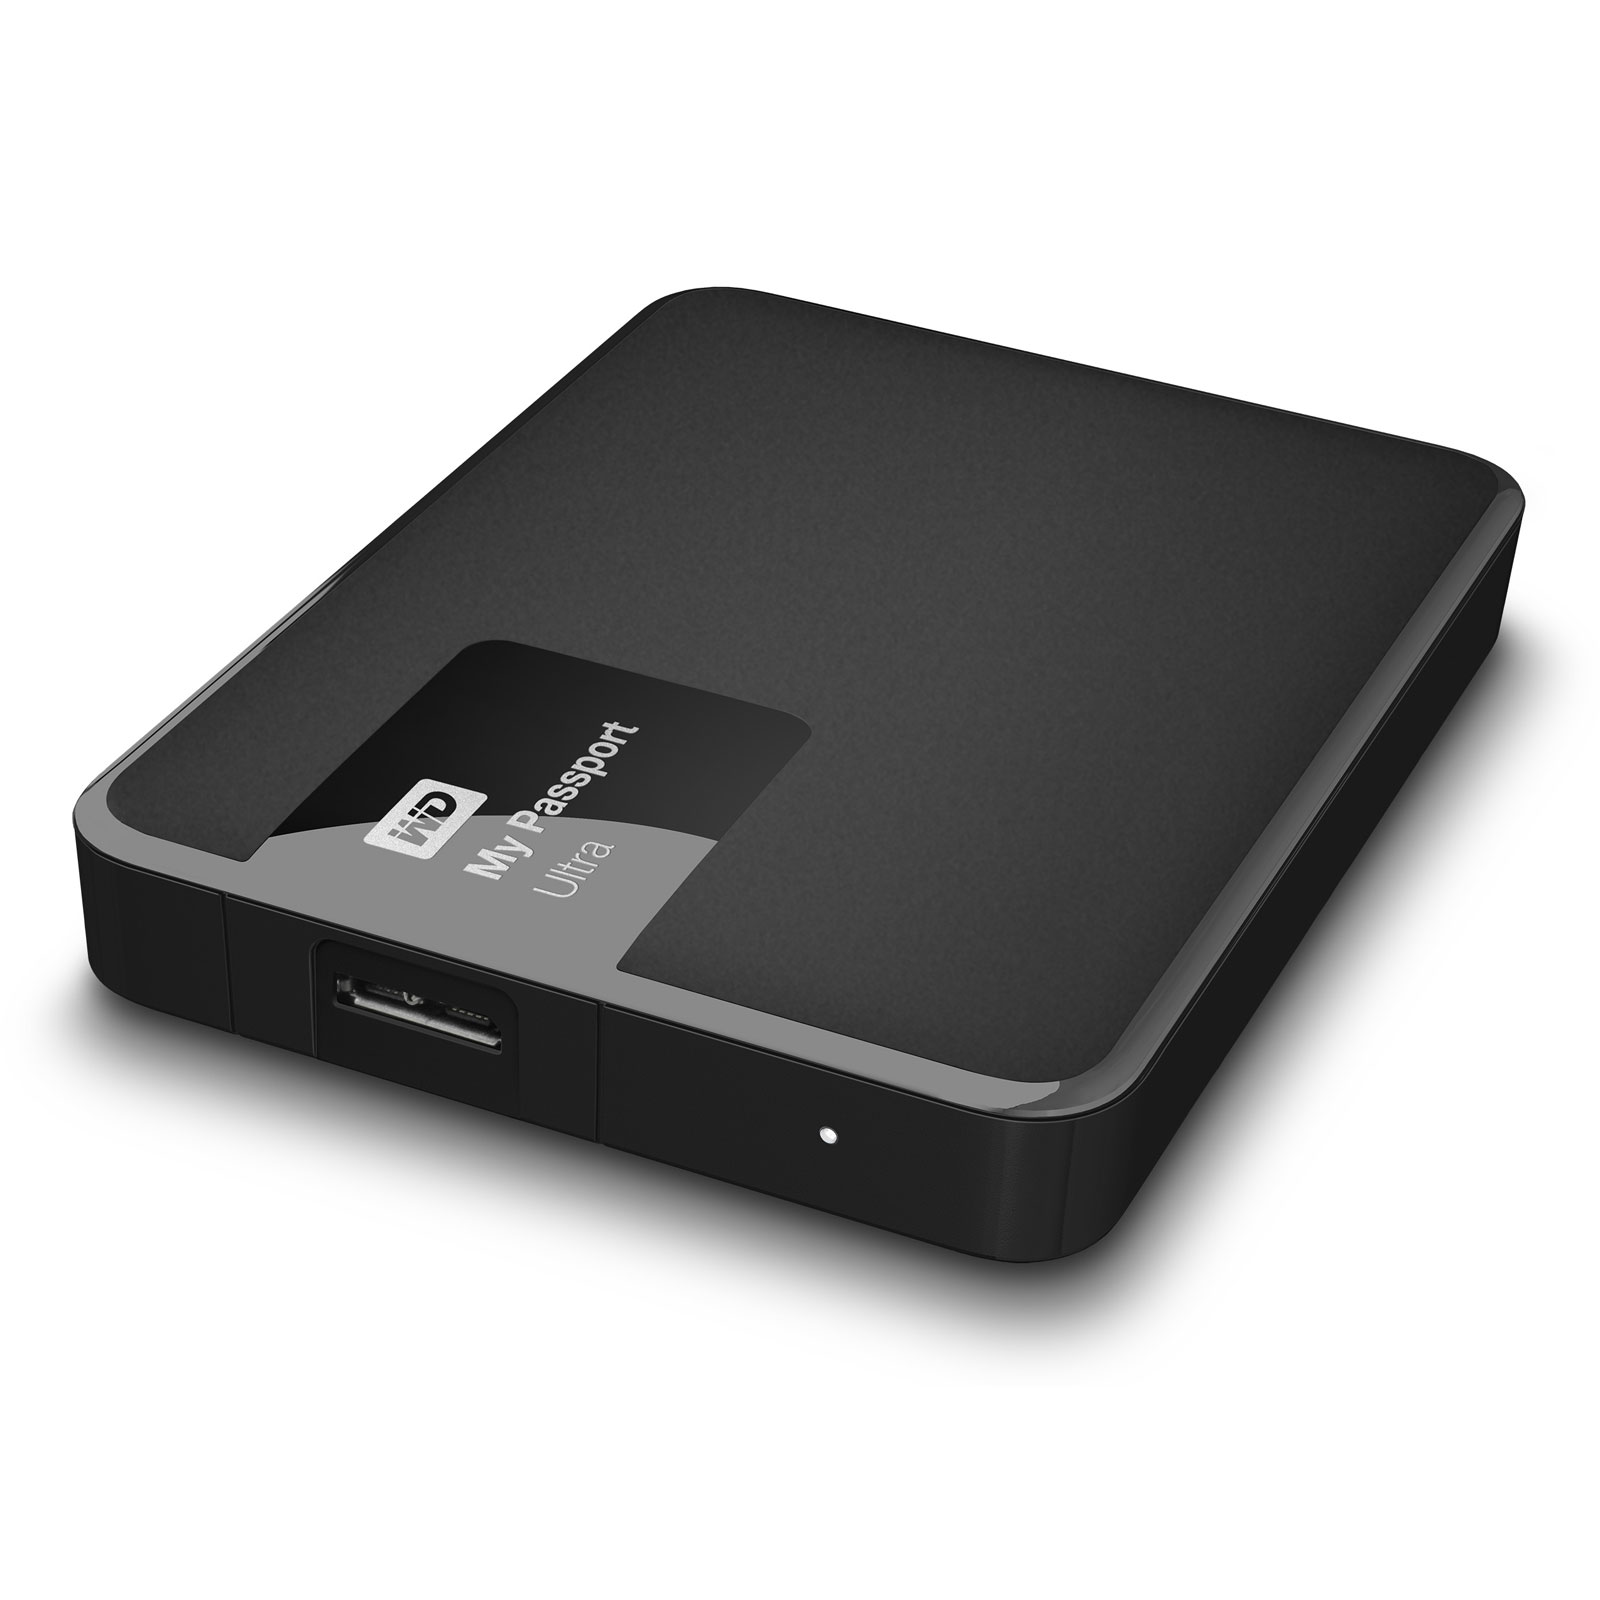 2tb external hard drive for macbook pro best buy